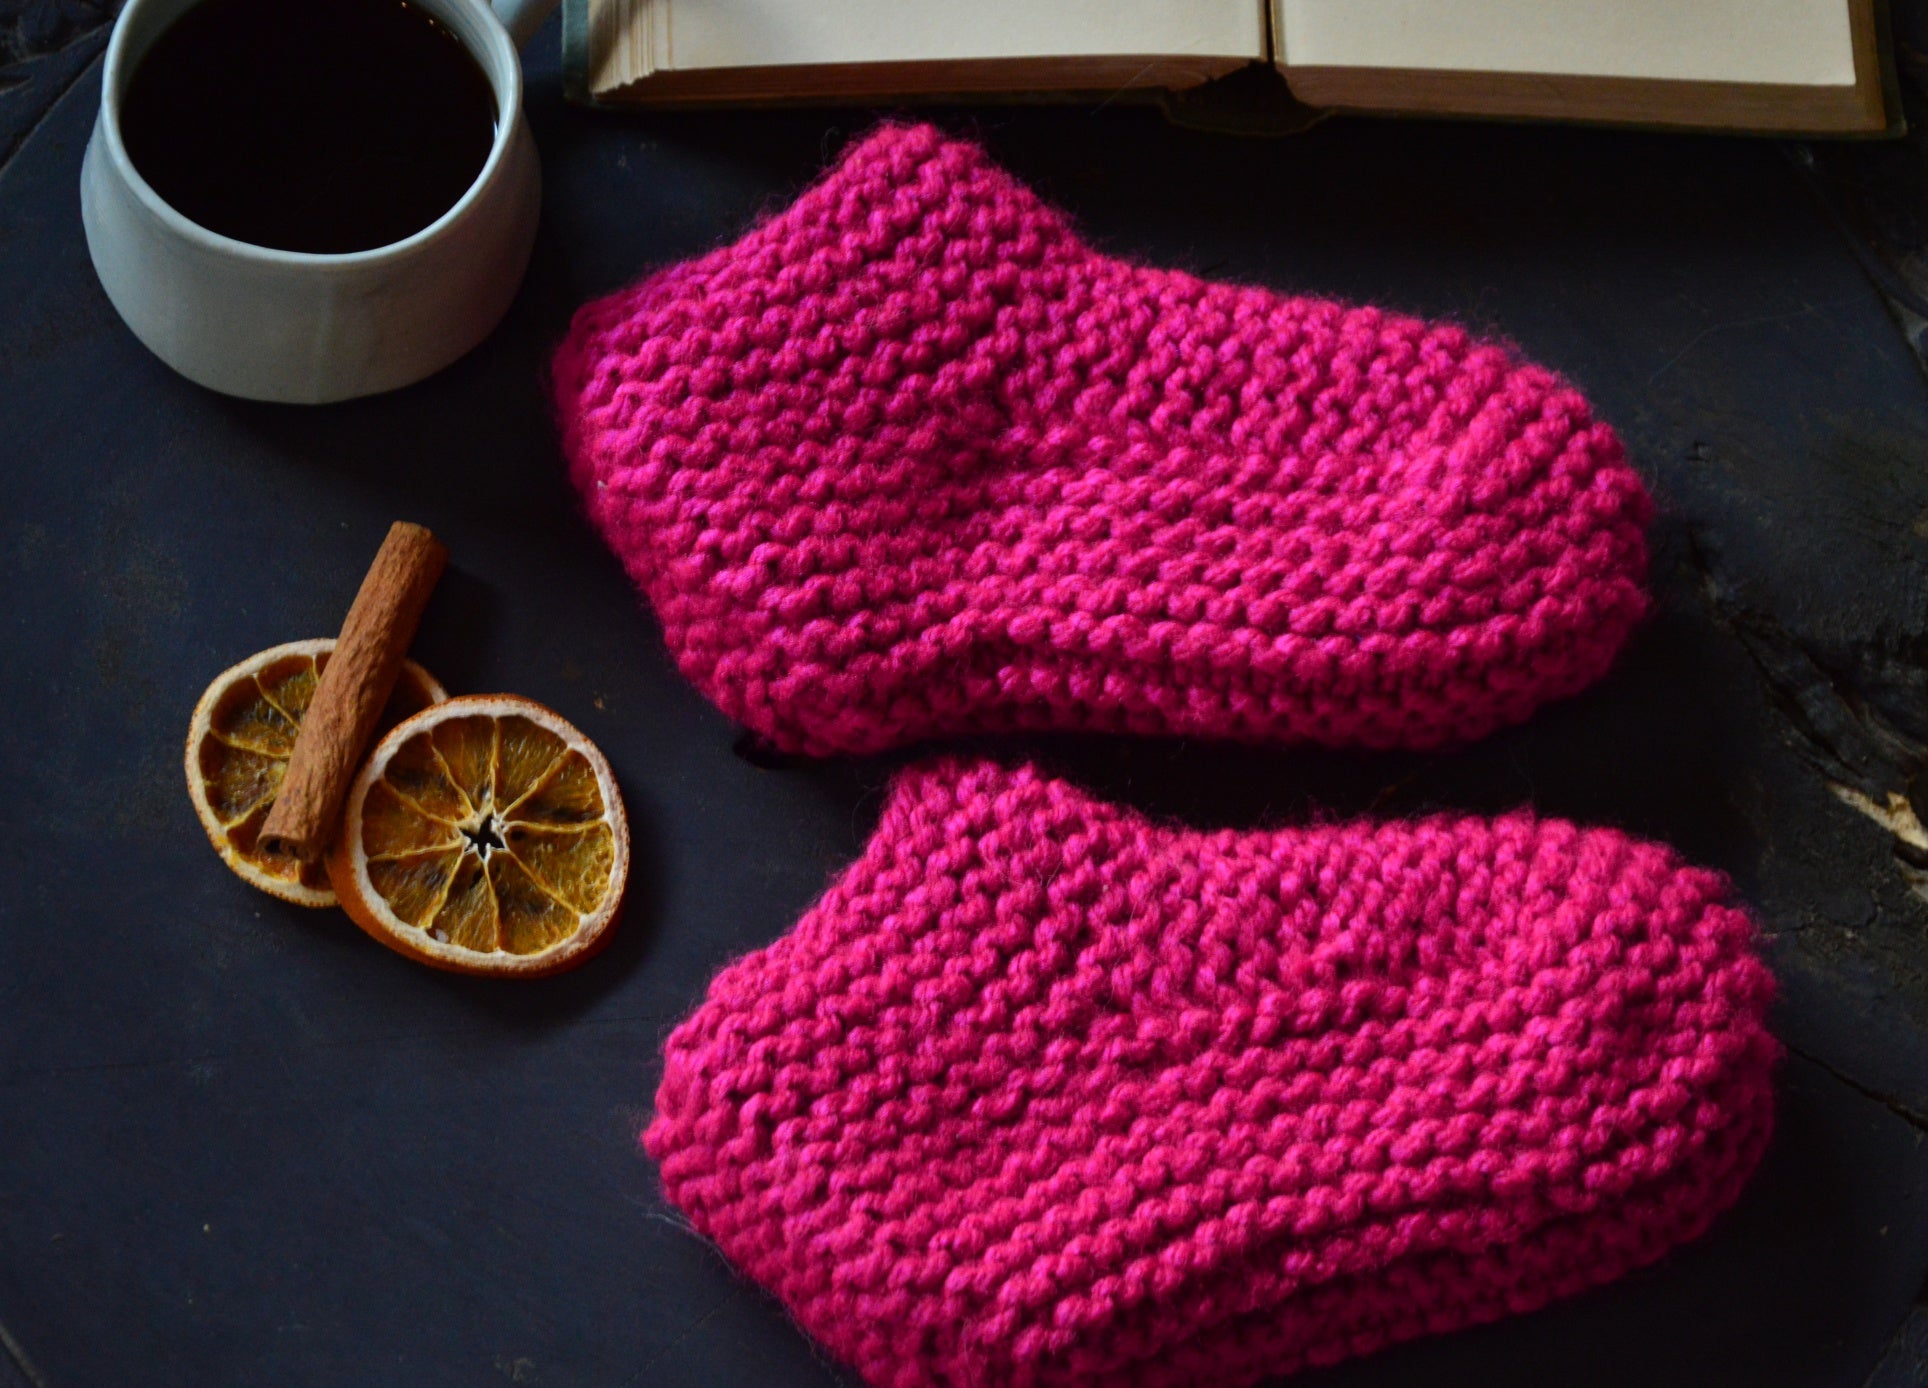 Hot Pink Booties & Bed Socks | Woven Stories